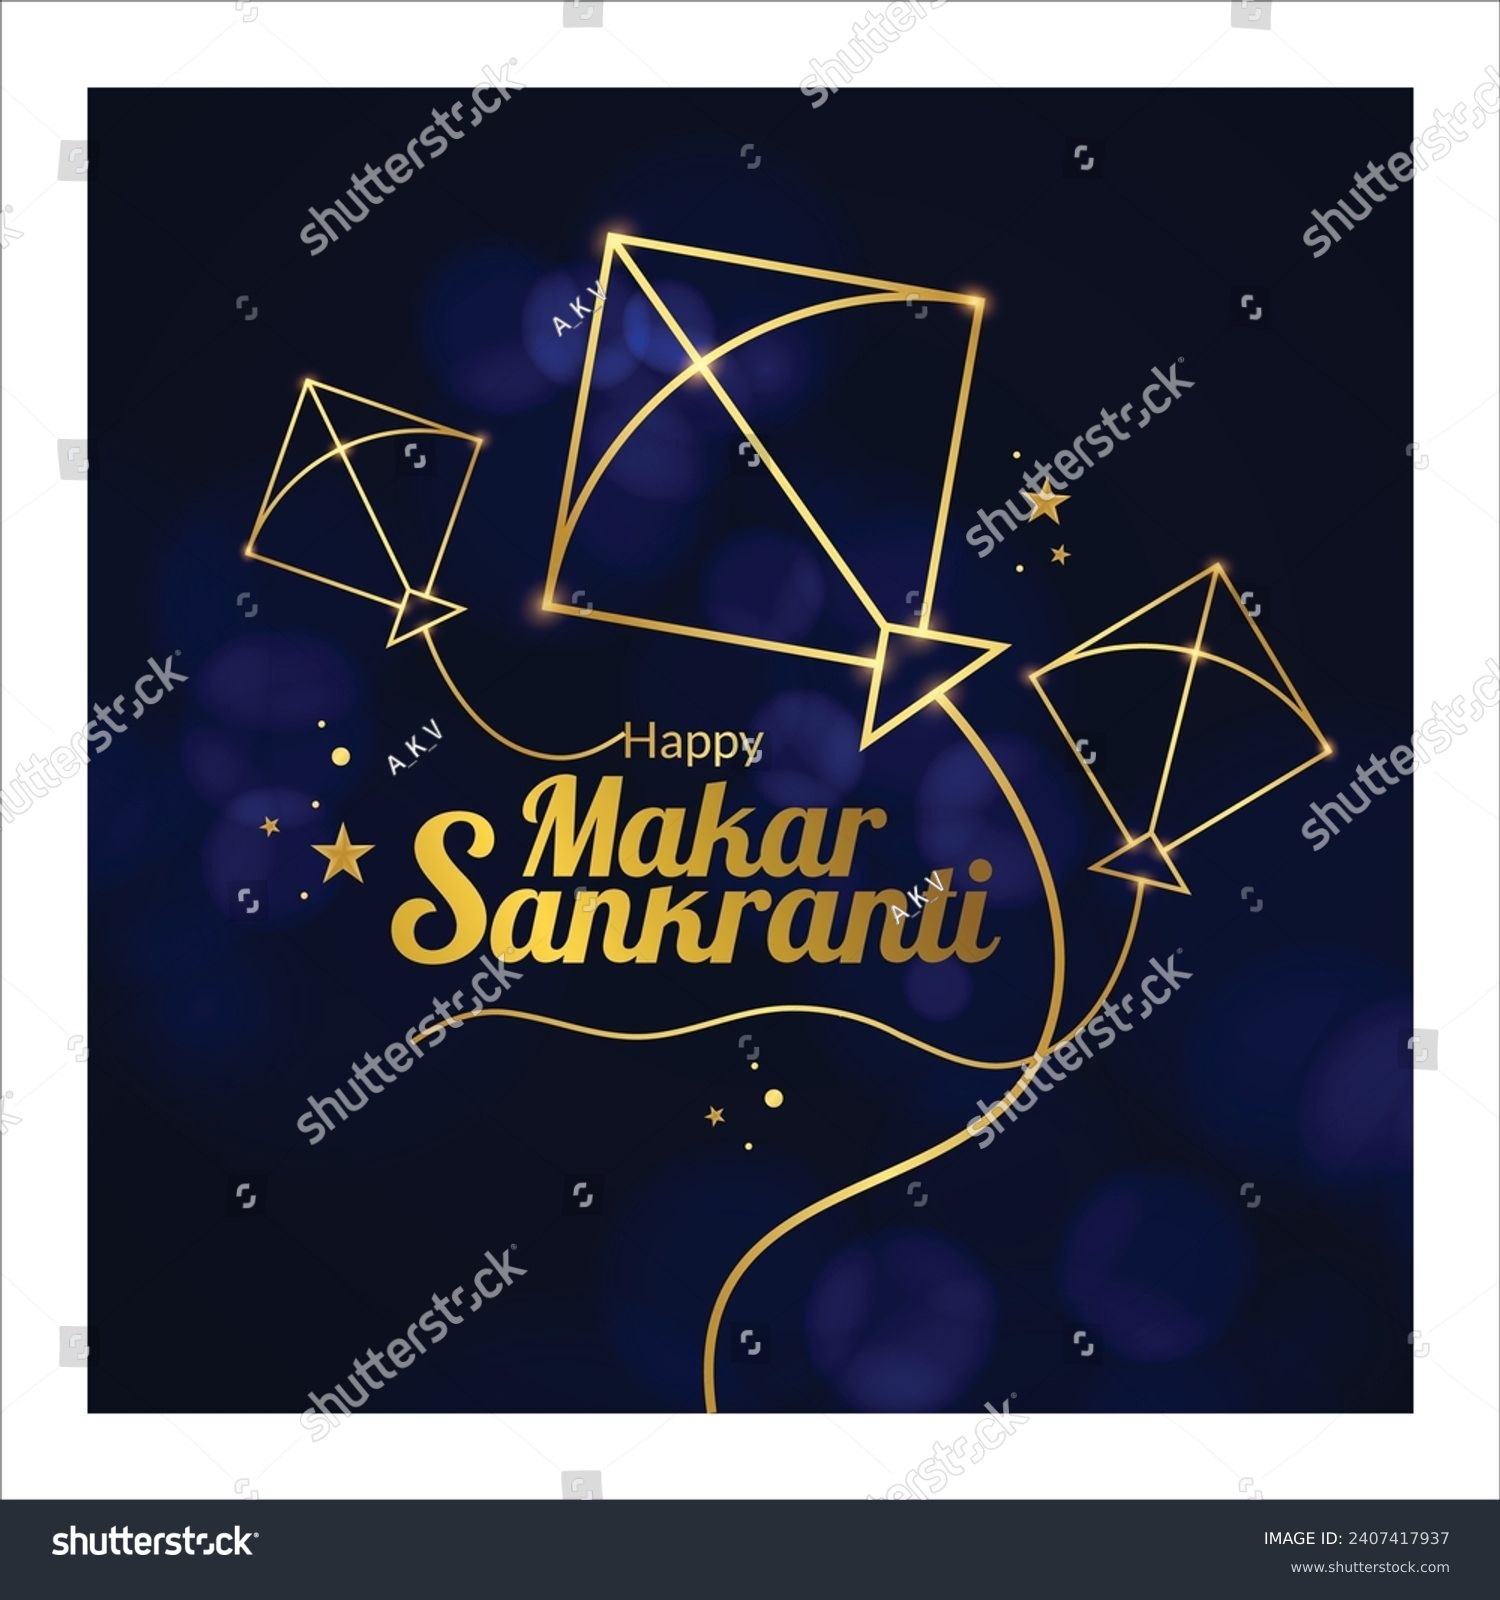 SVG of Makar Sankranti India festival with golden kites svg